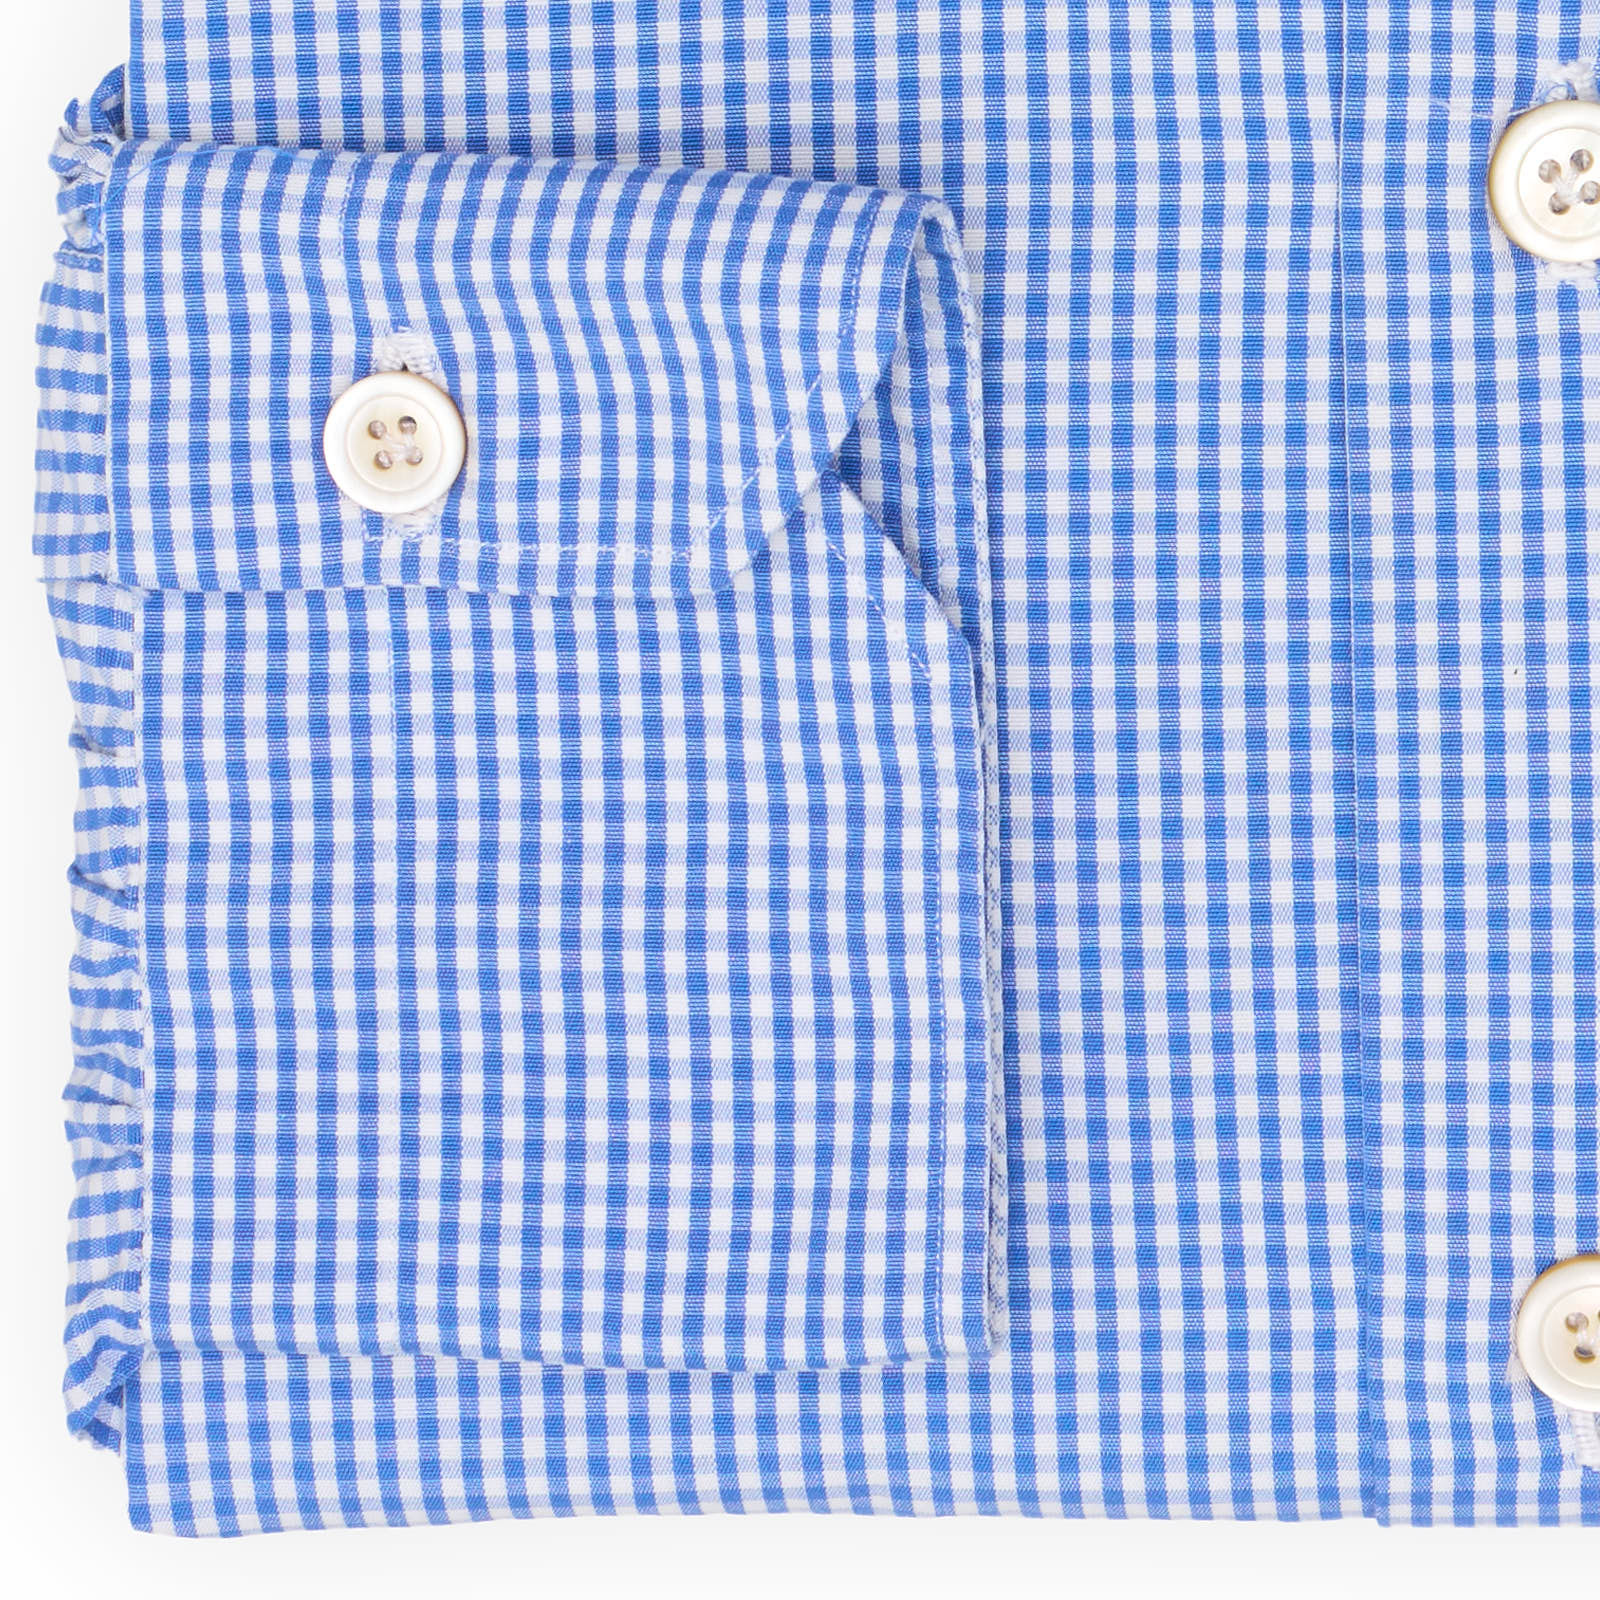 KITON Napoli Handmade Blue Plaid Cotton Button-Down Dress Shirt EU 38 NEW US 15